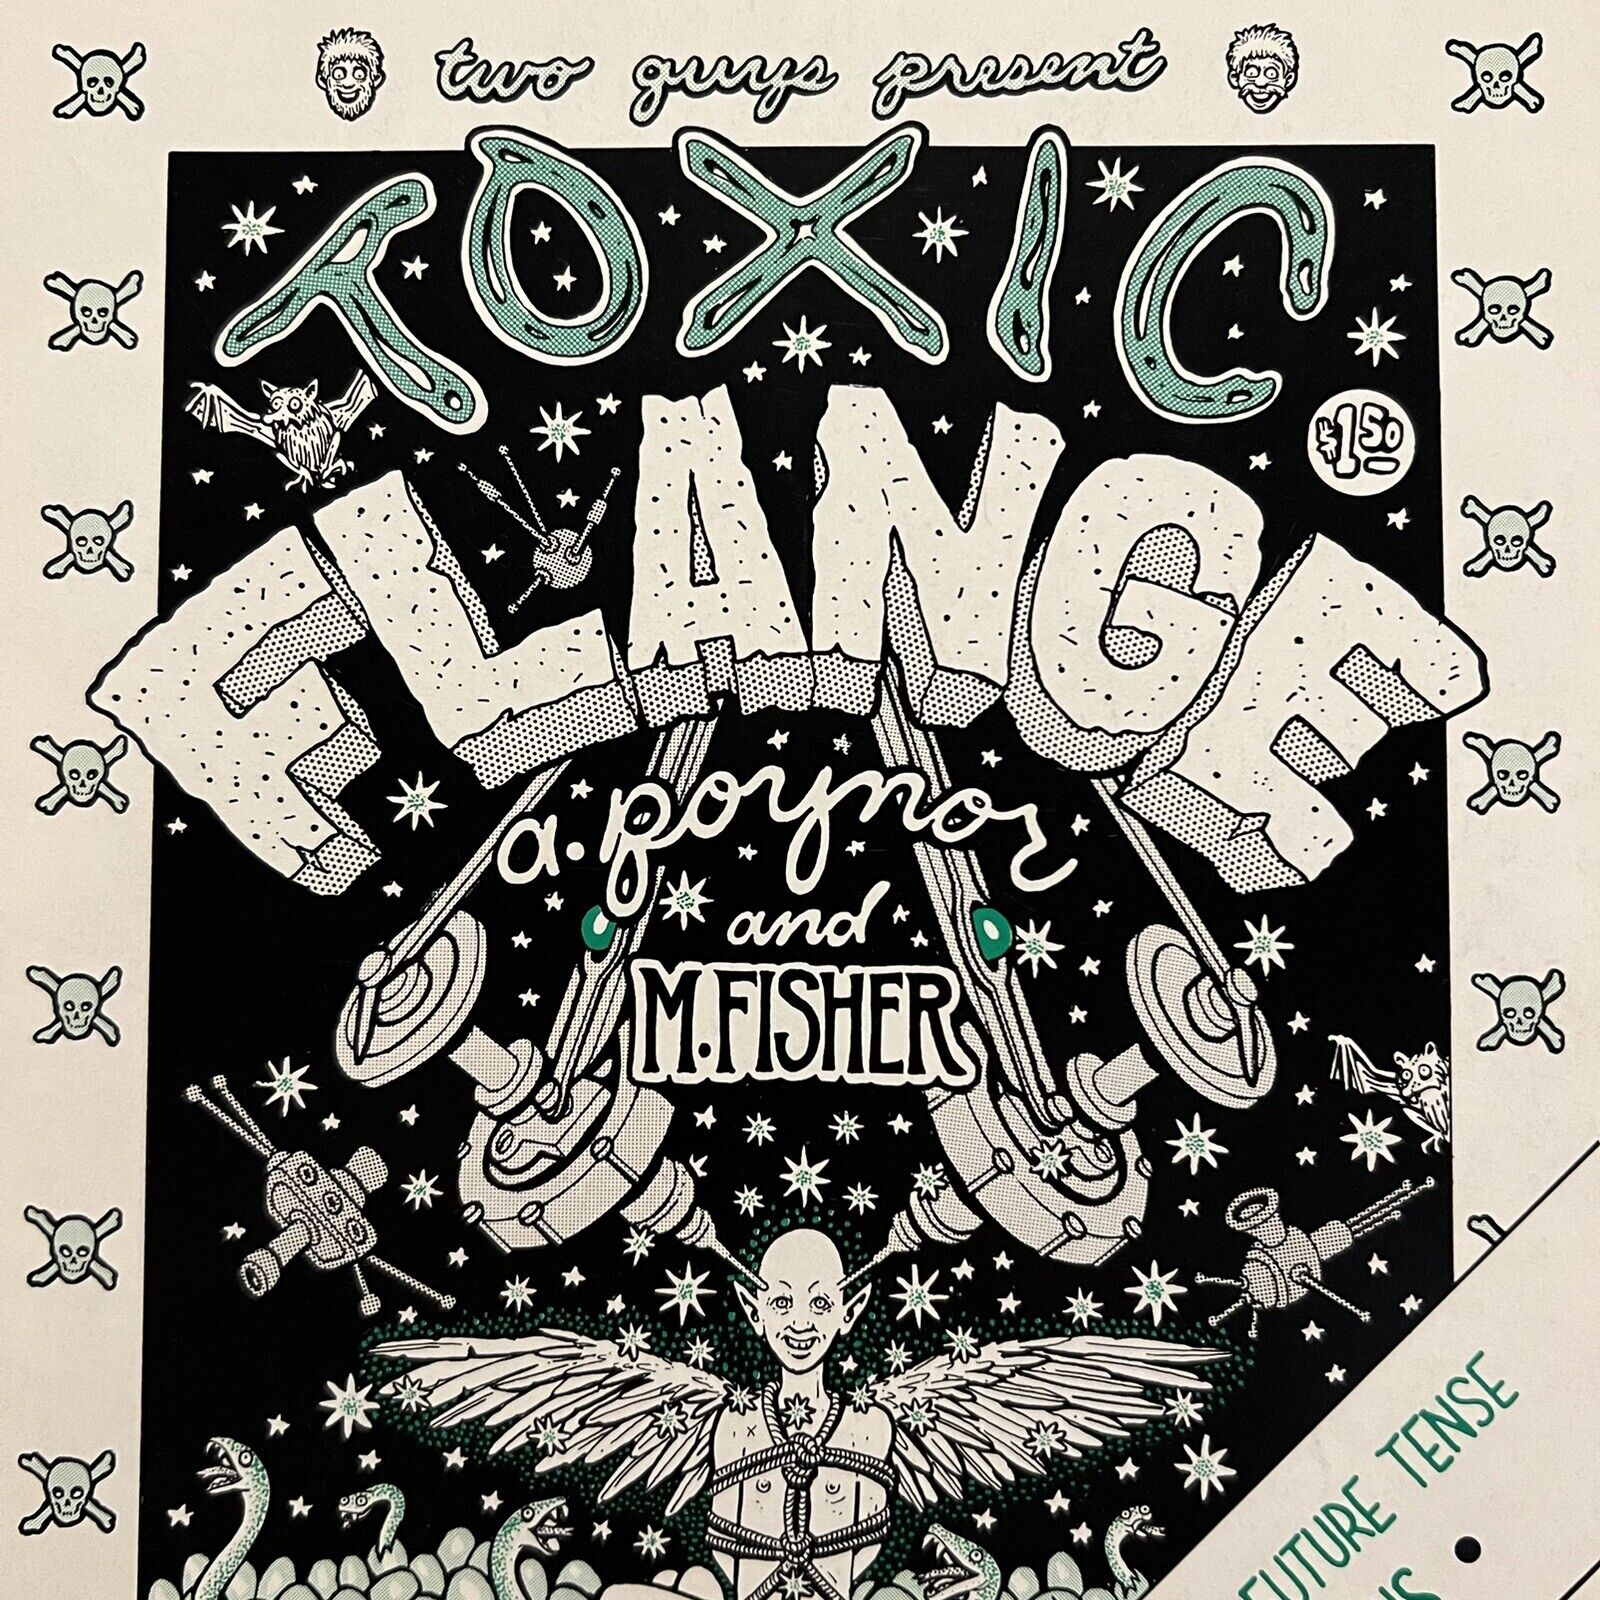 Toxic Flange 1980 Poynographics Mark Fisher Andy Poynor Underground Comix RARE